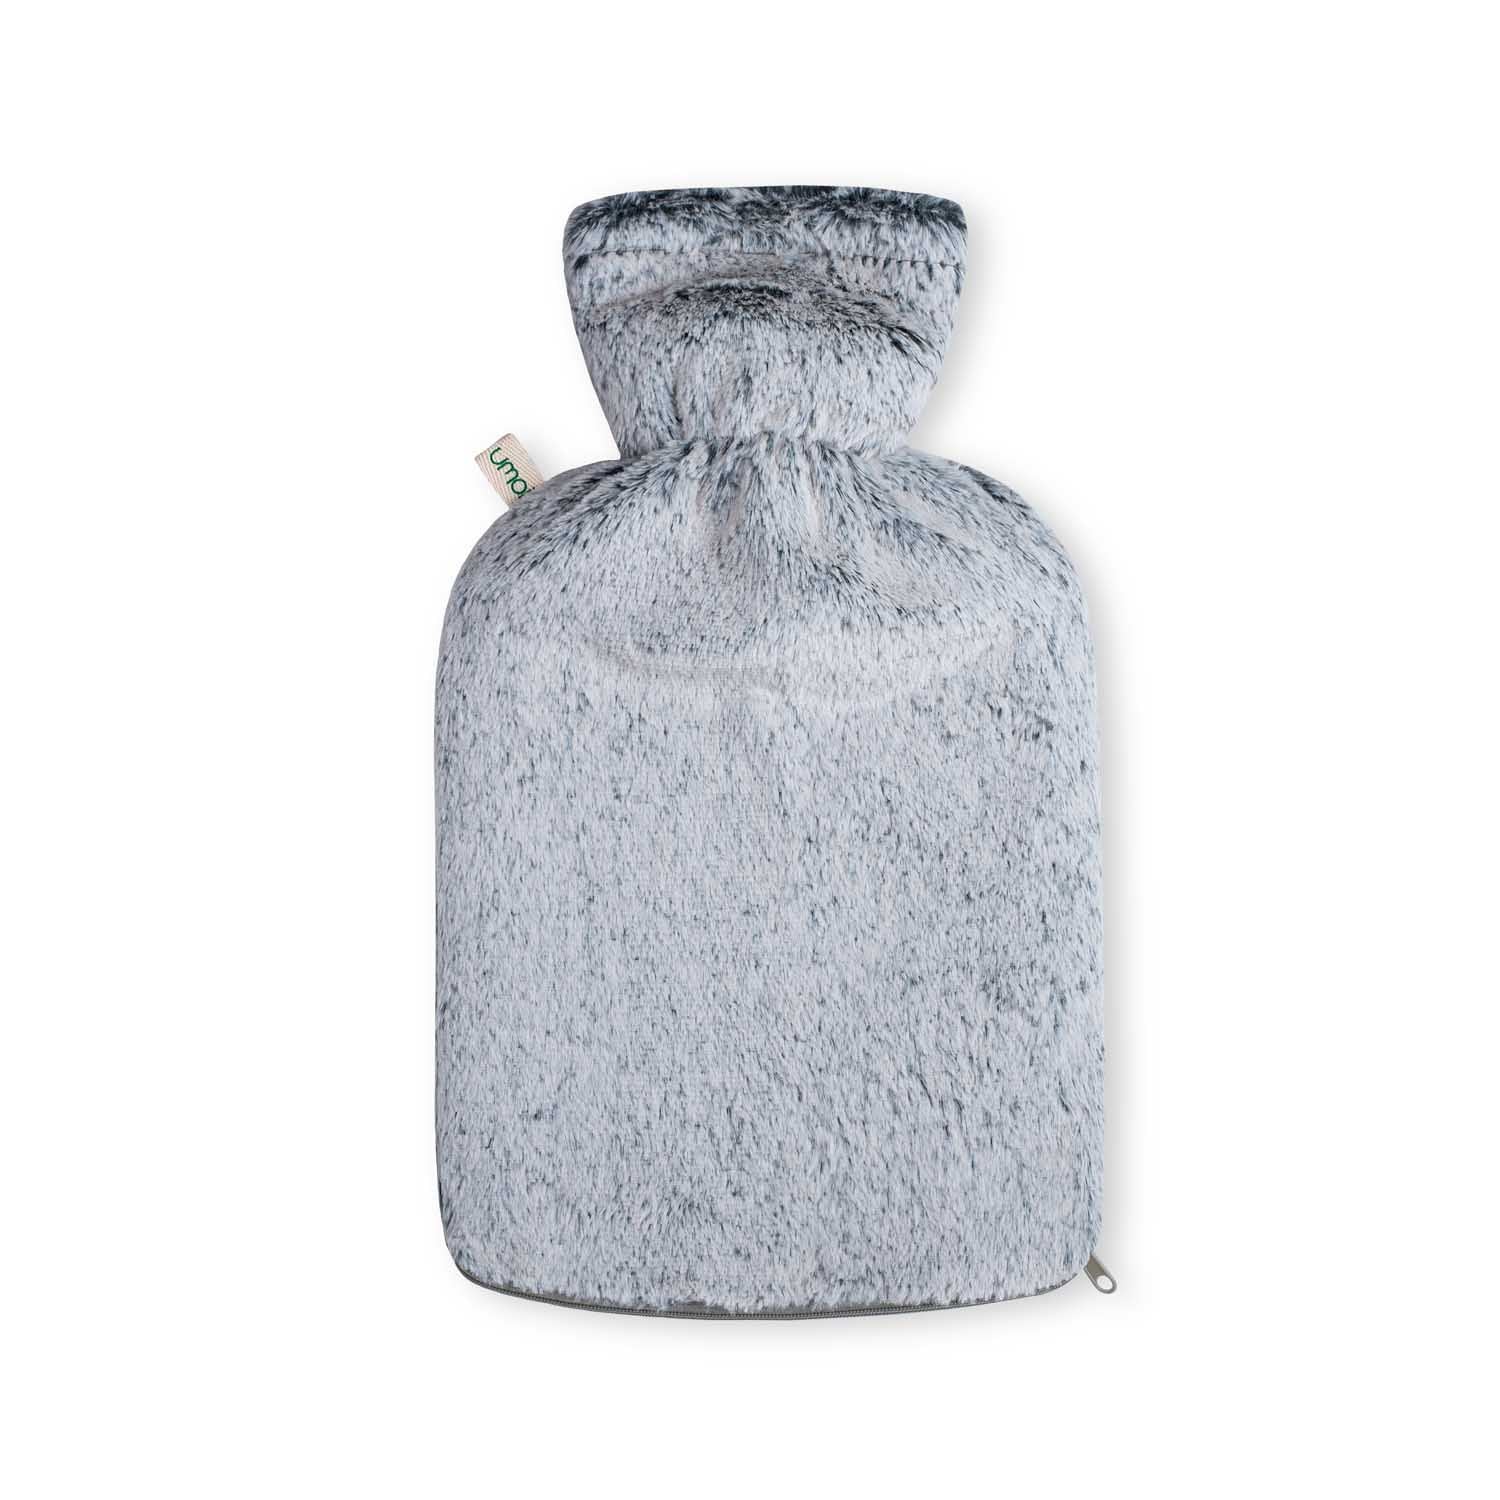 UMOI Öko Naturgummi Wärmflasche 2 Liter mit kuschligem Mink Fleece Bezug (Grau)